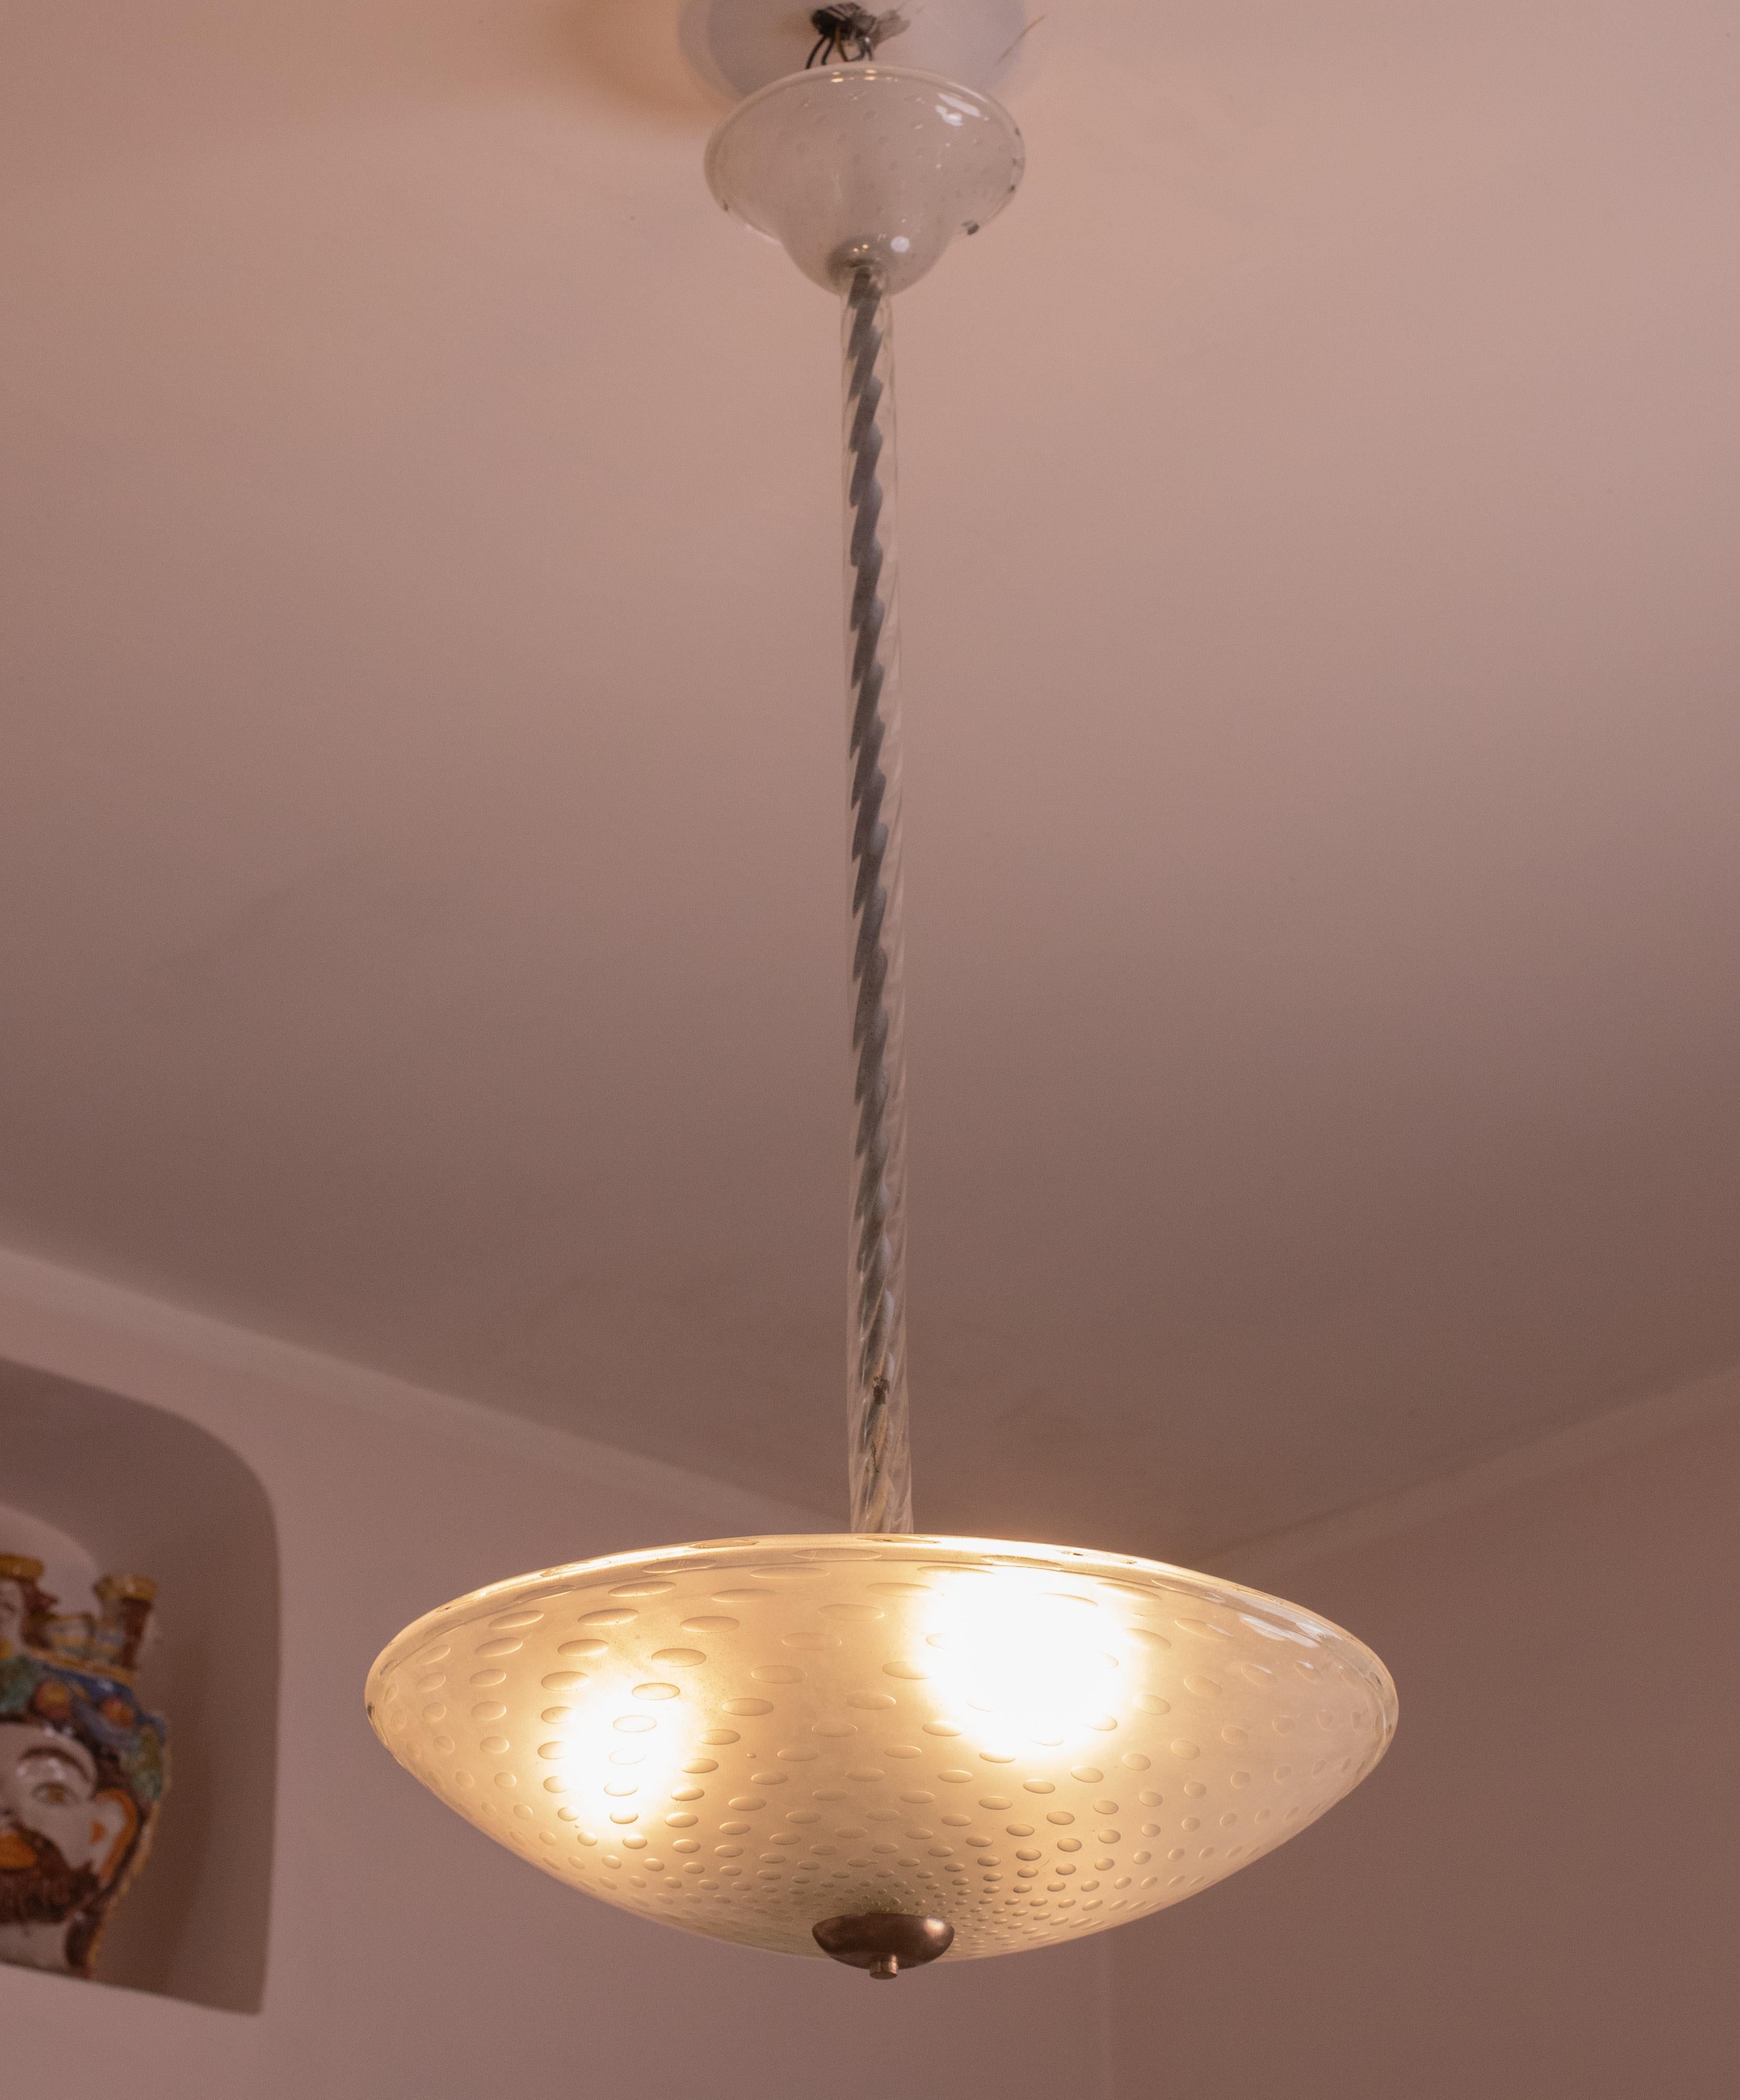 Stunning Murano chandelier with 